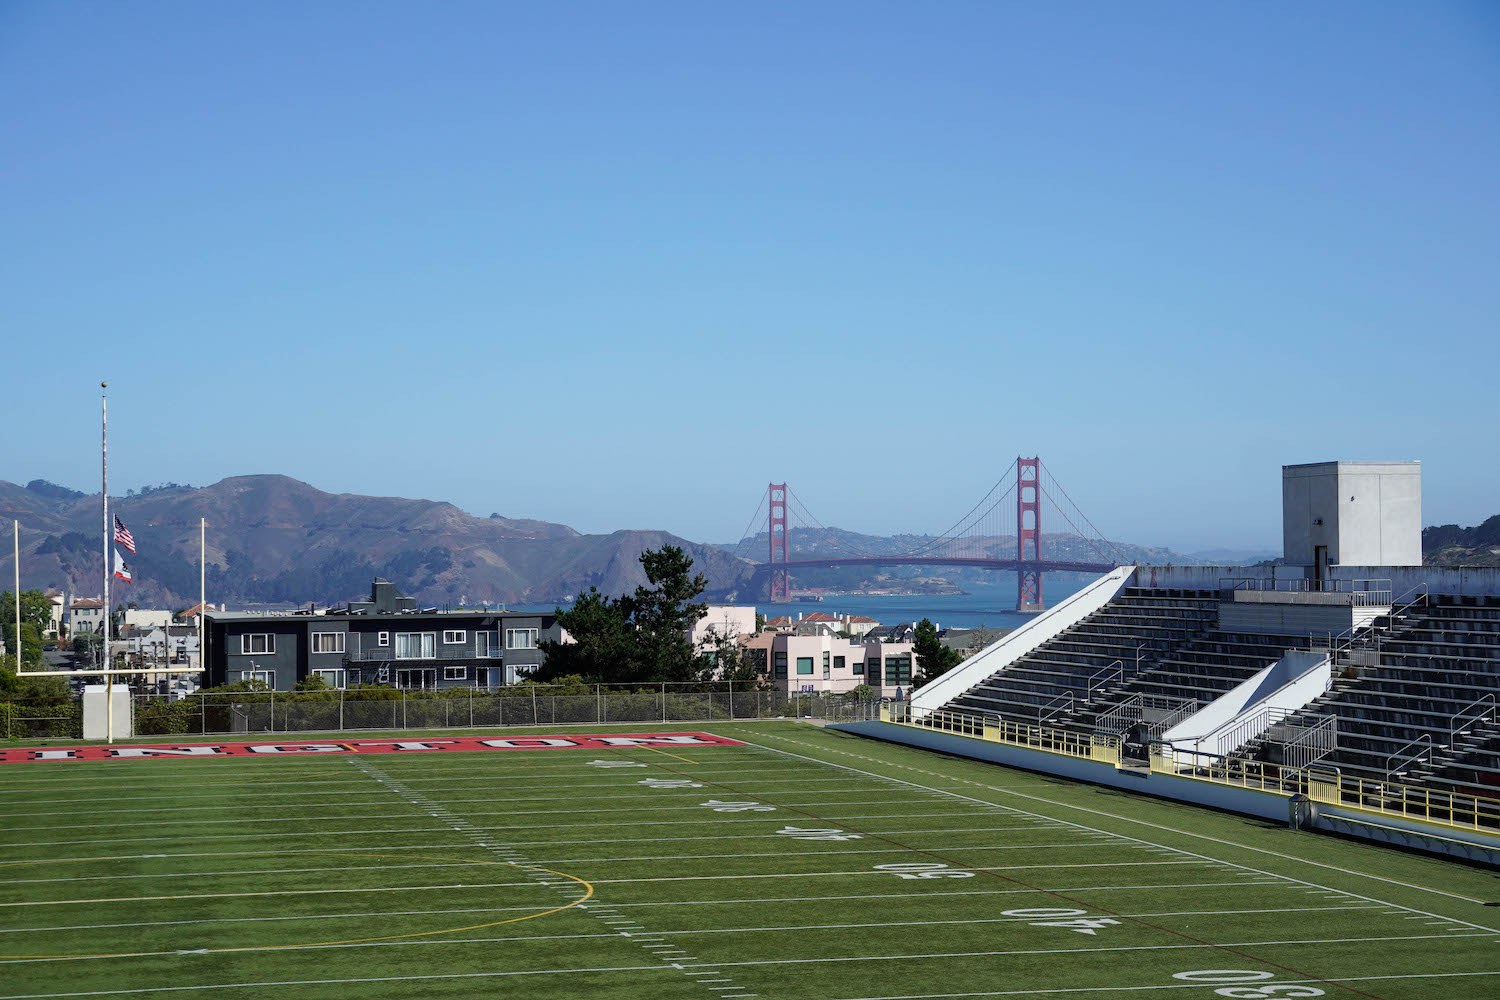 The football field at George Washington High School in San Francisco overlooks the Golden Gate Bridge.